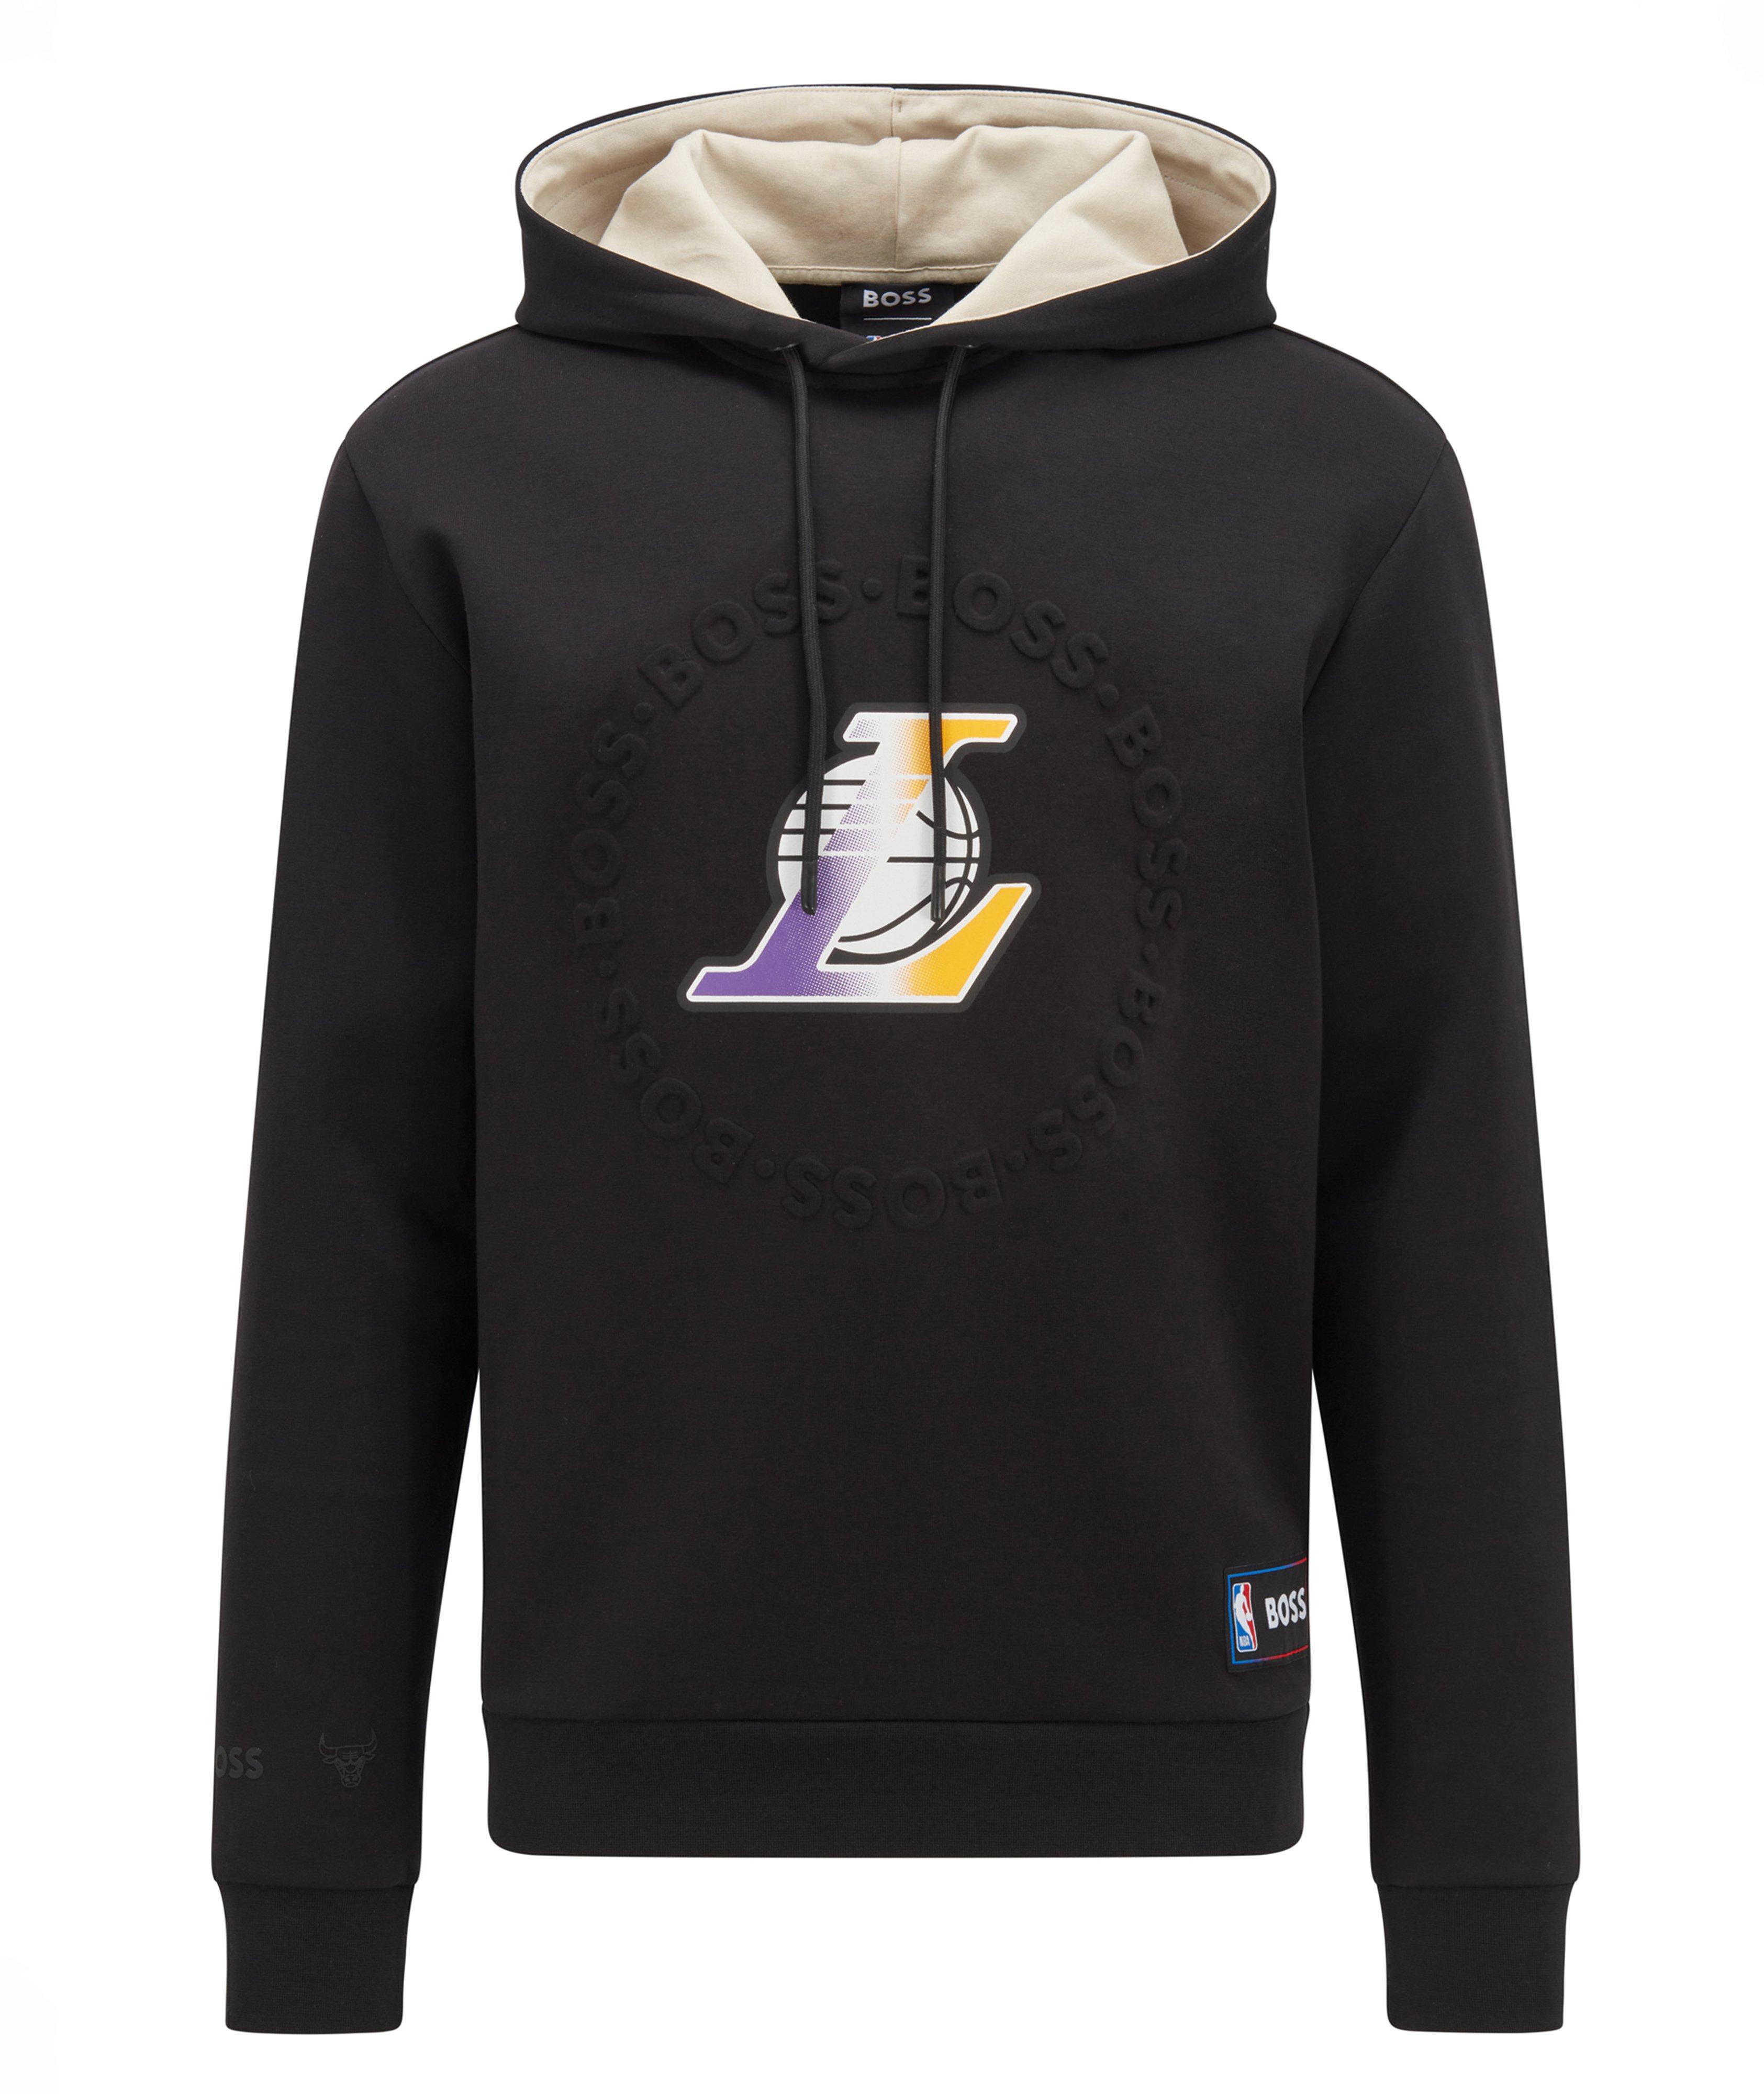 Kangourou avec logo des Lakers, collection NBA image 0